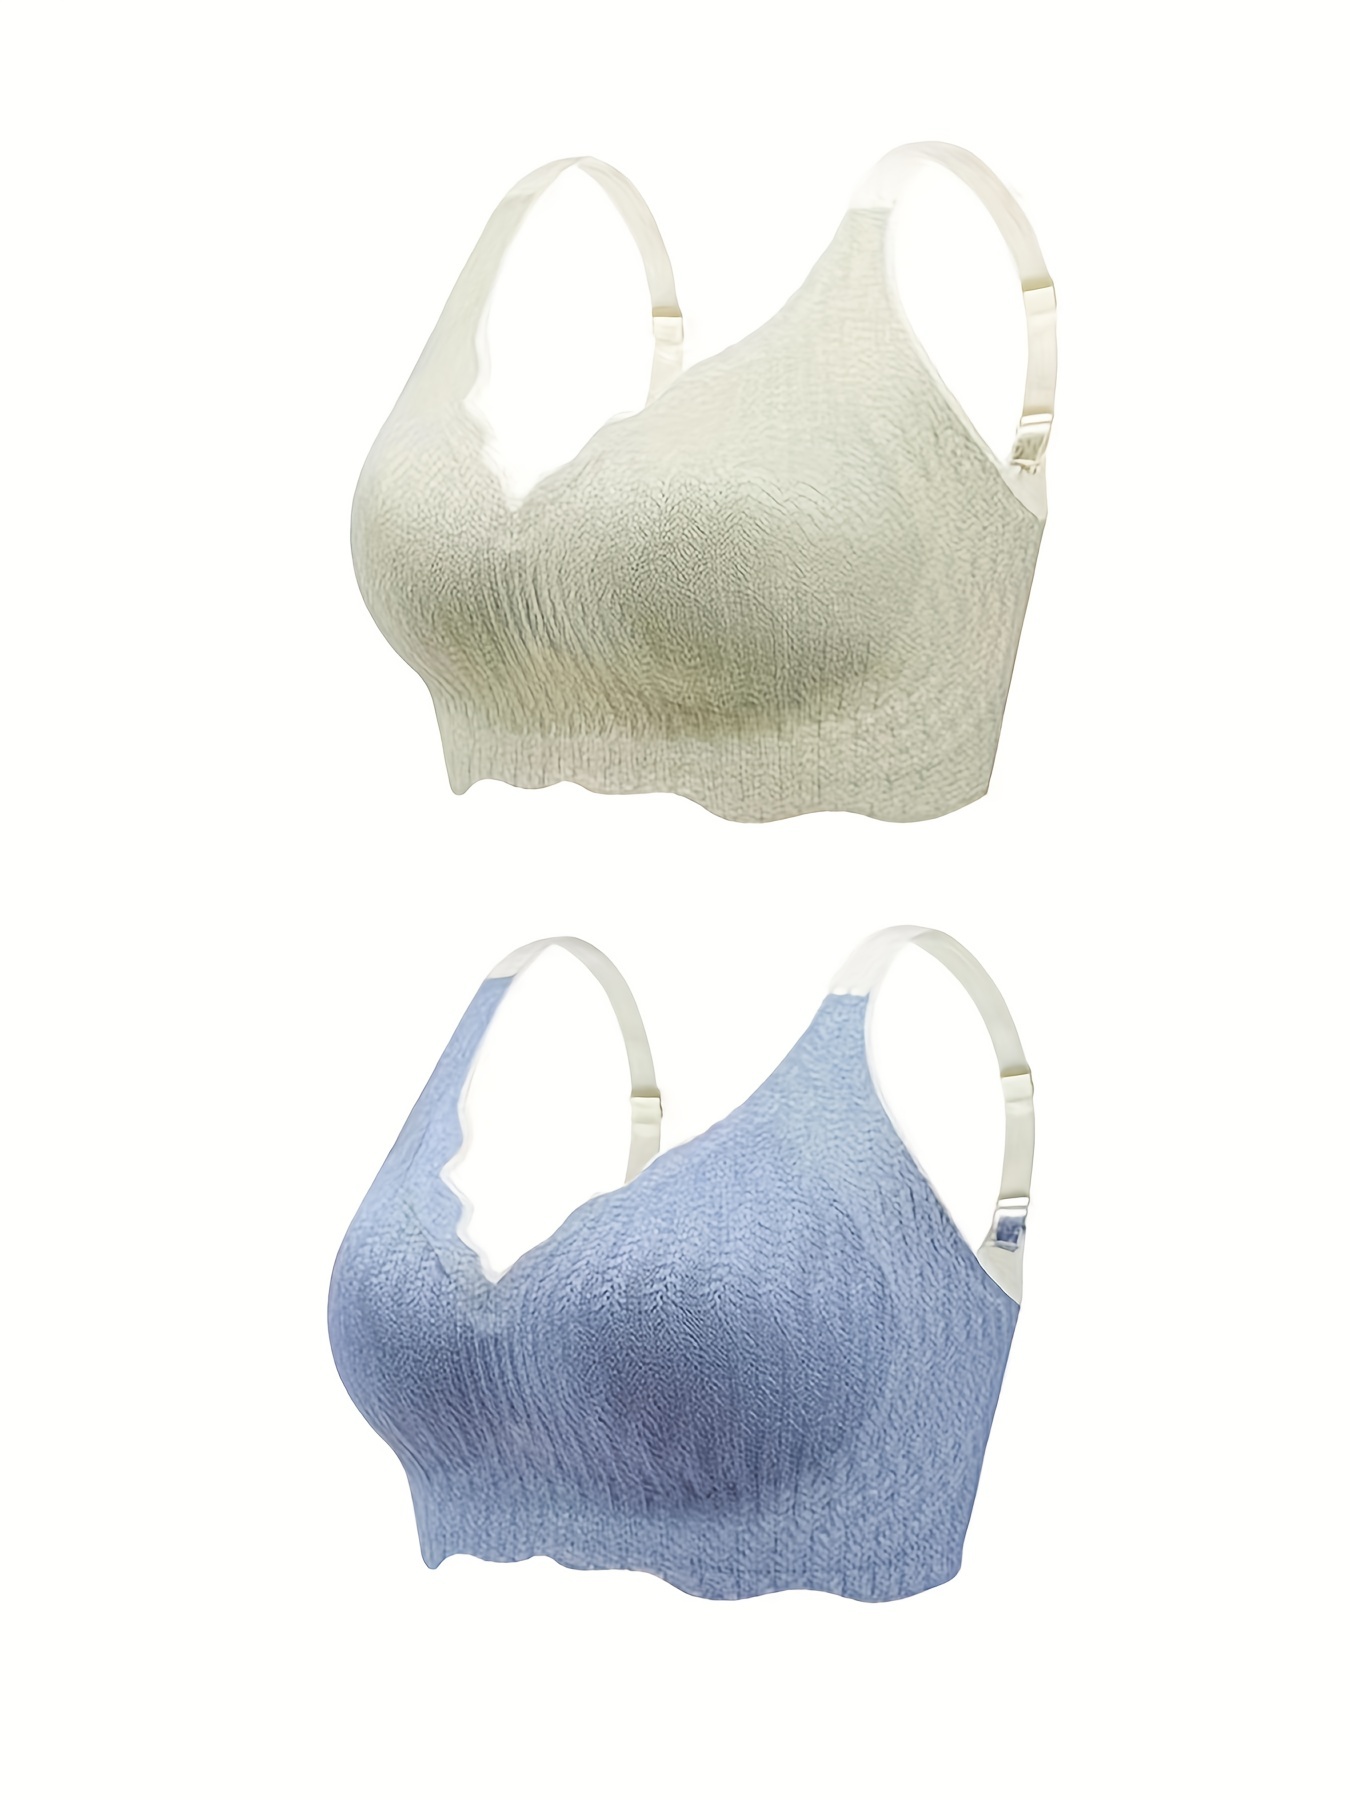 8pcs Contrast Lace Wireless Bras, Comfy & Breathable Scallop Trim Bra,  Women's Lingerie & Underwear